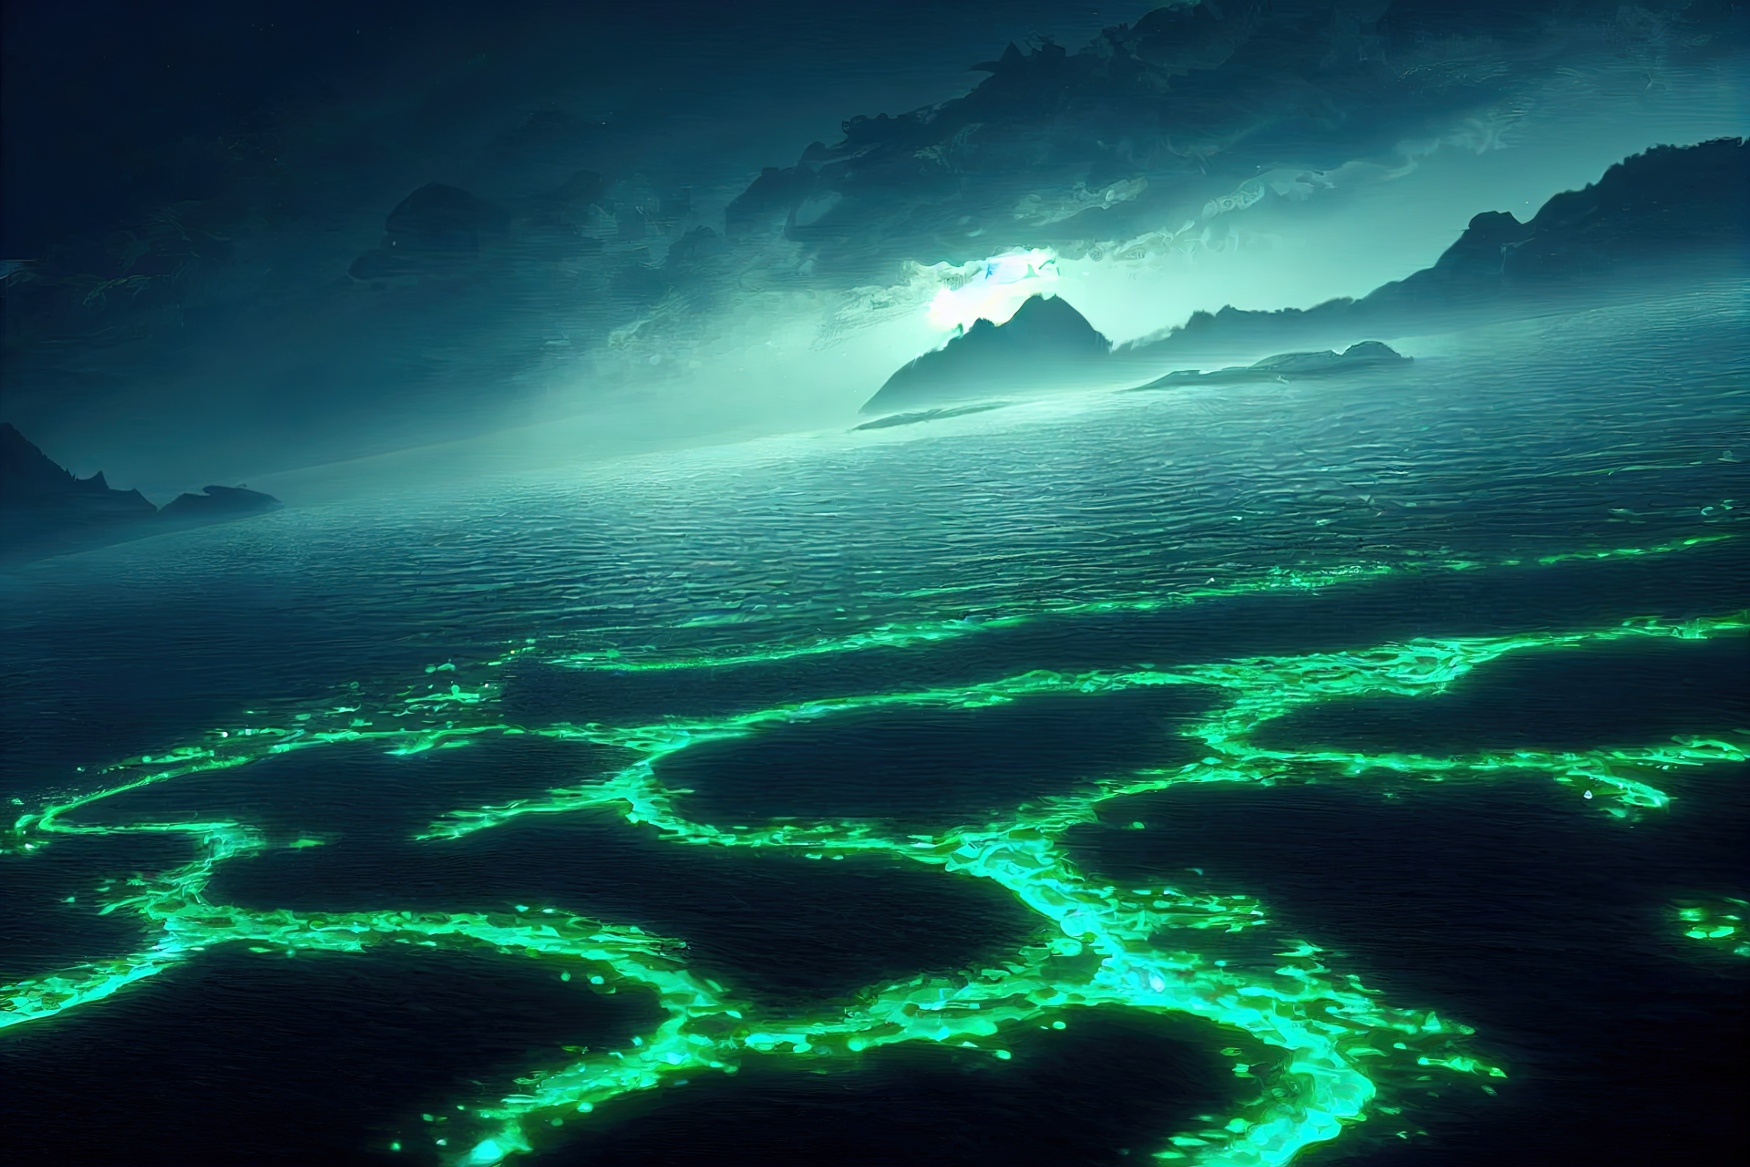 Popular Bioluminescent Destinations To Visit Around The World Ranked